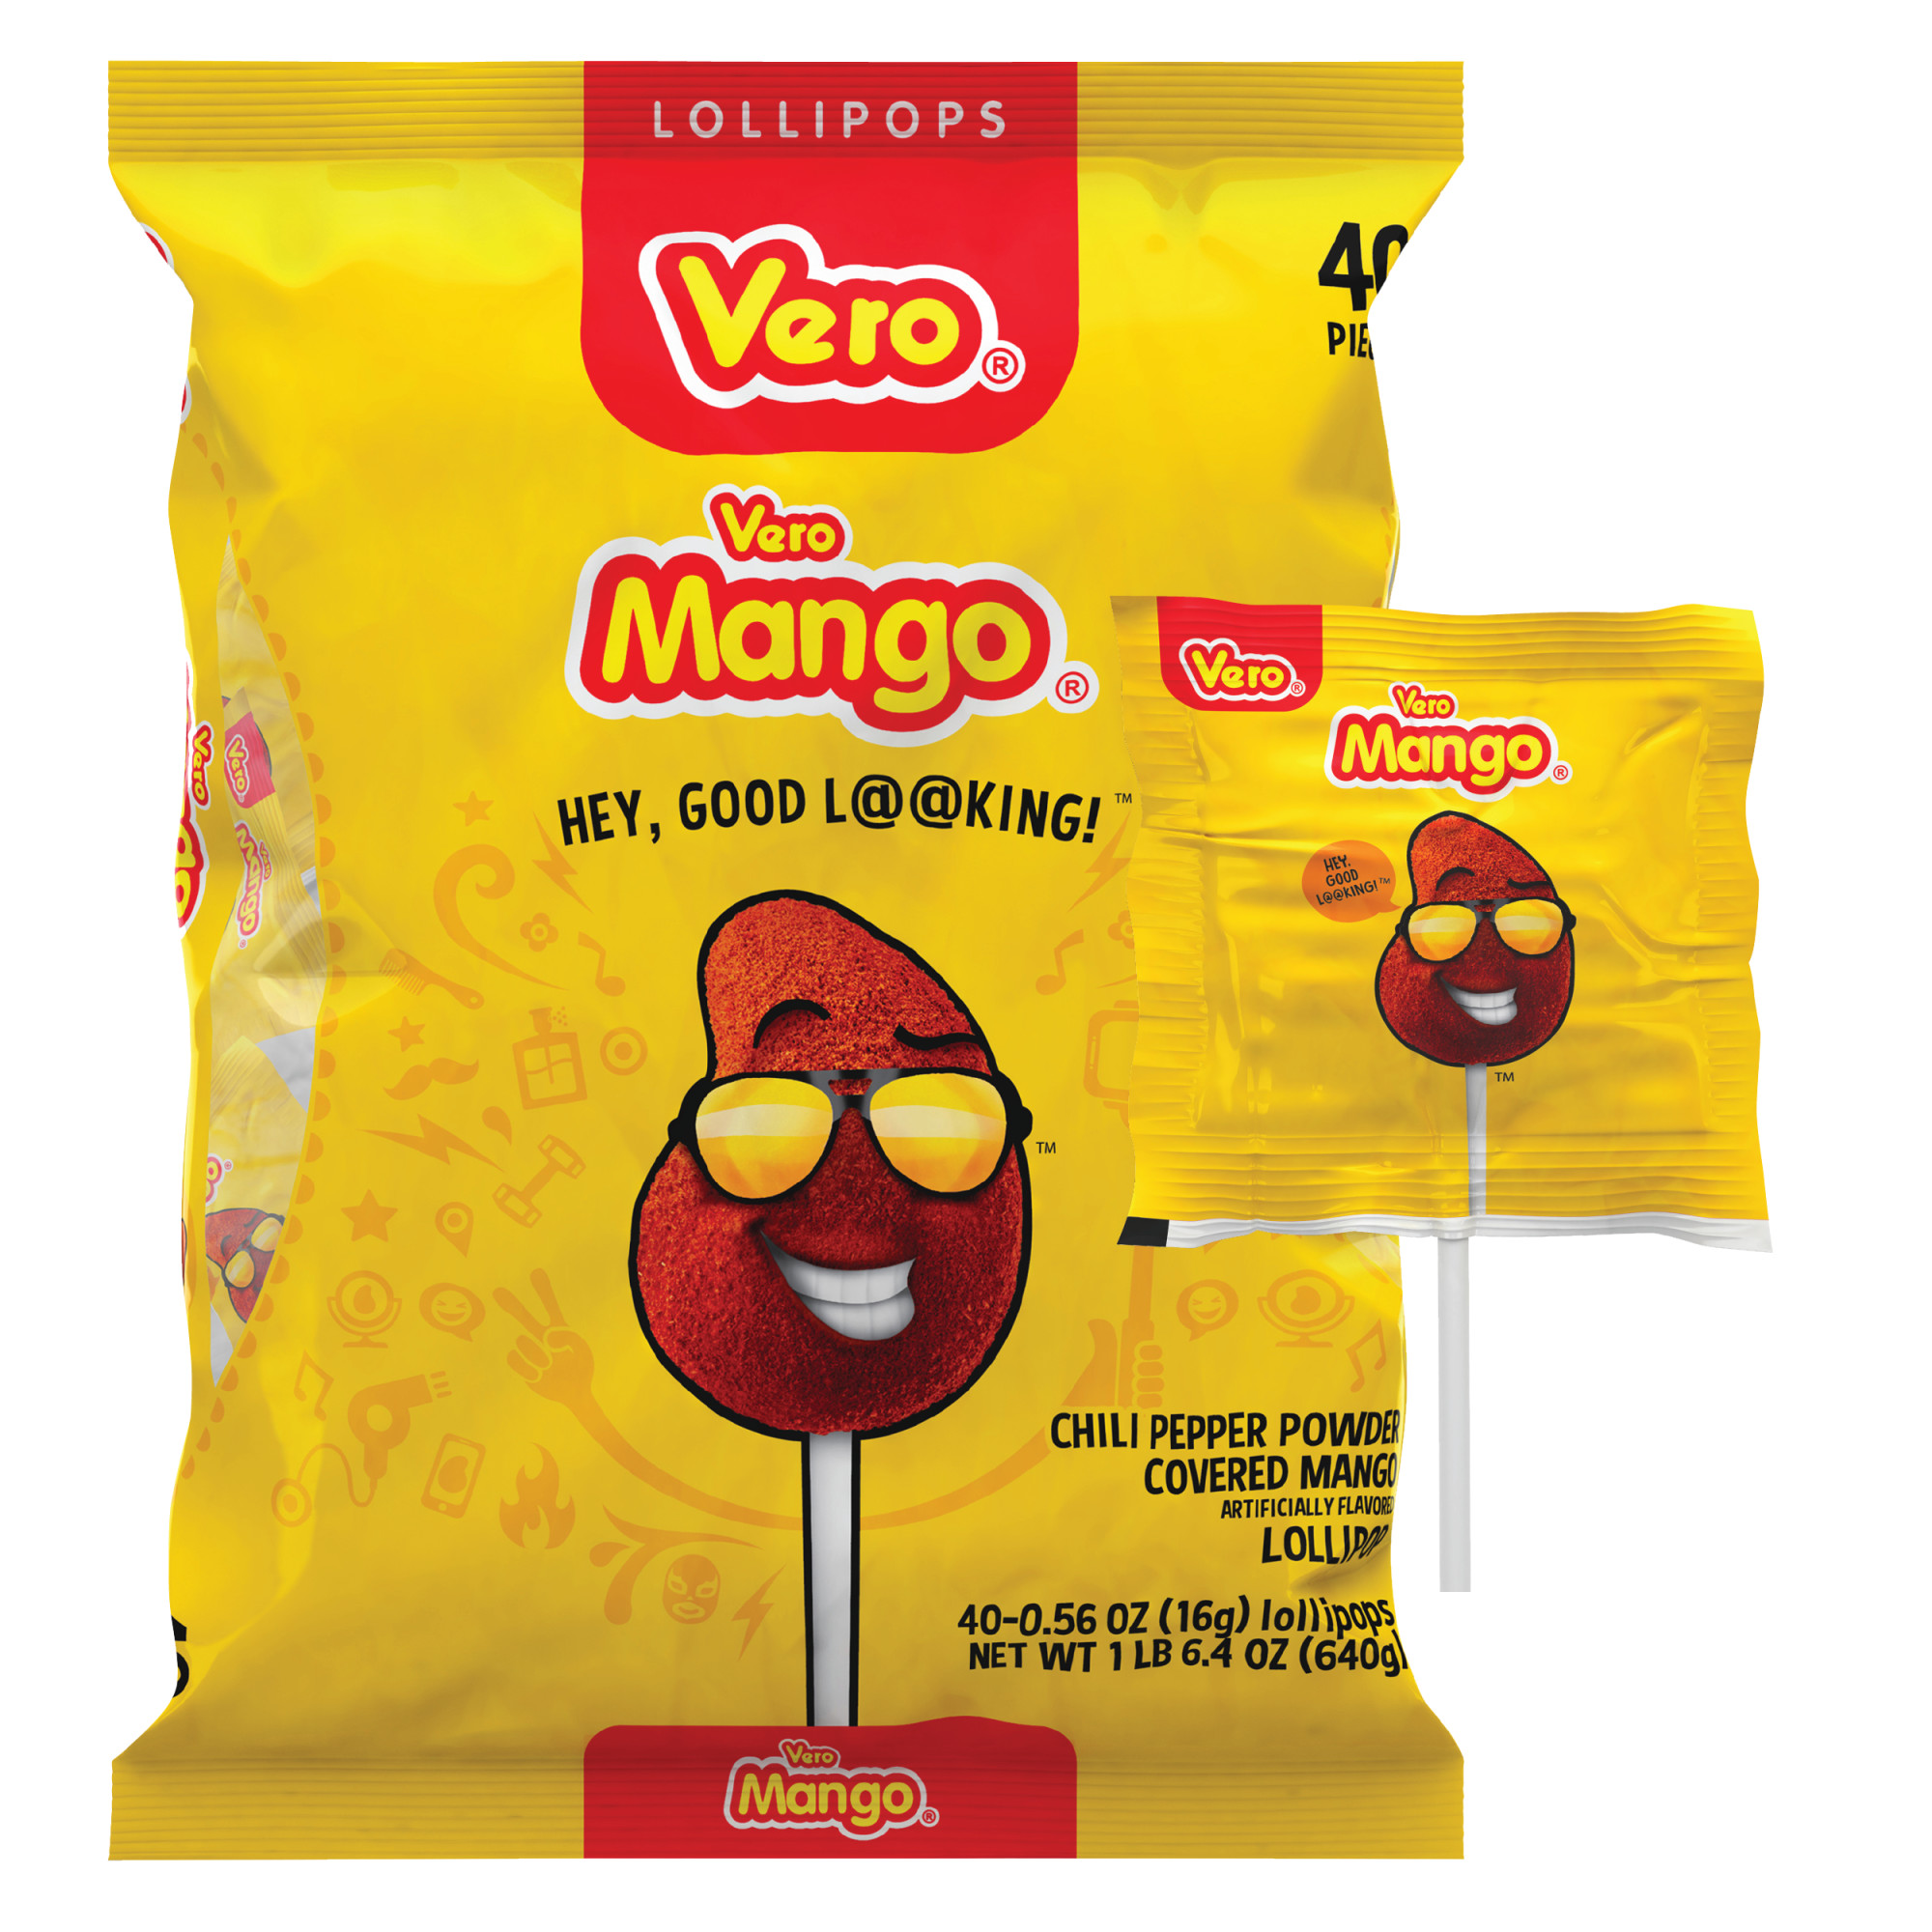 Vero Mango 40ct - image 1 of 8